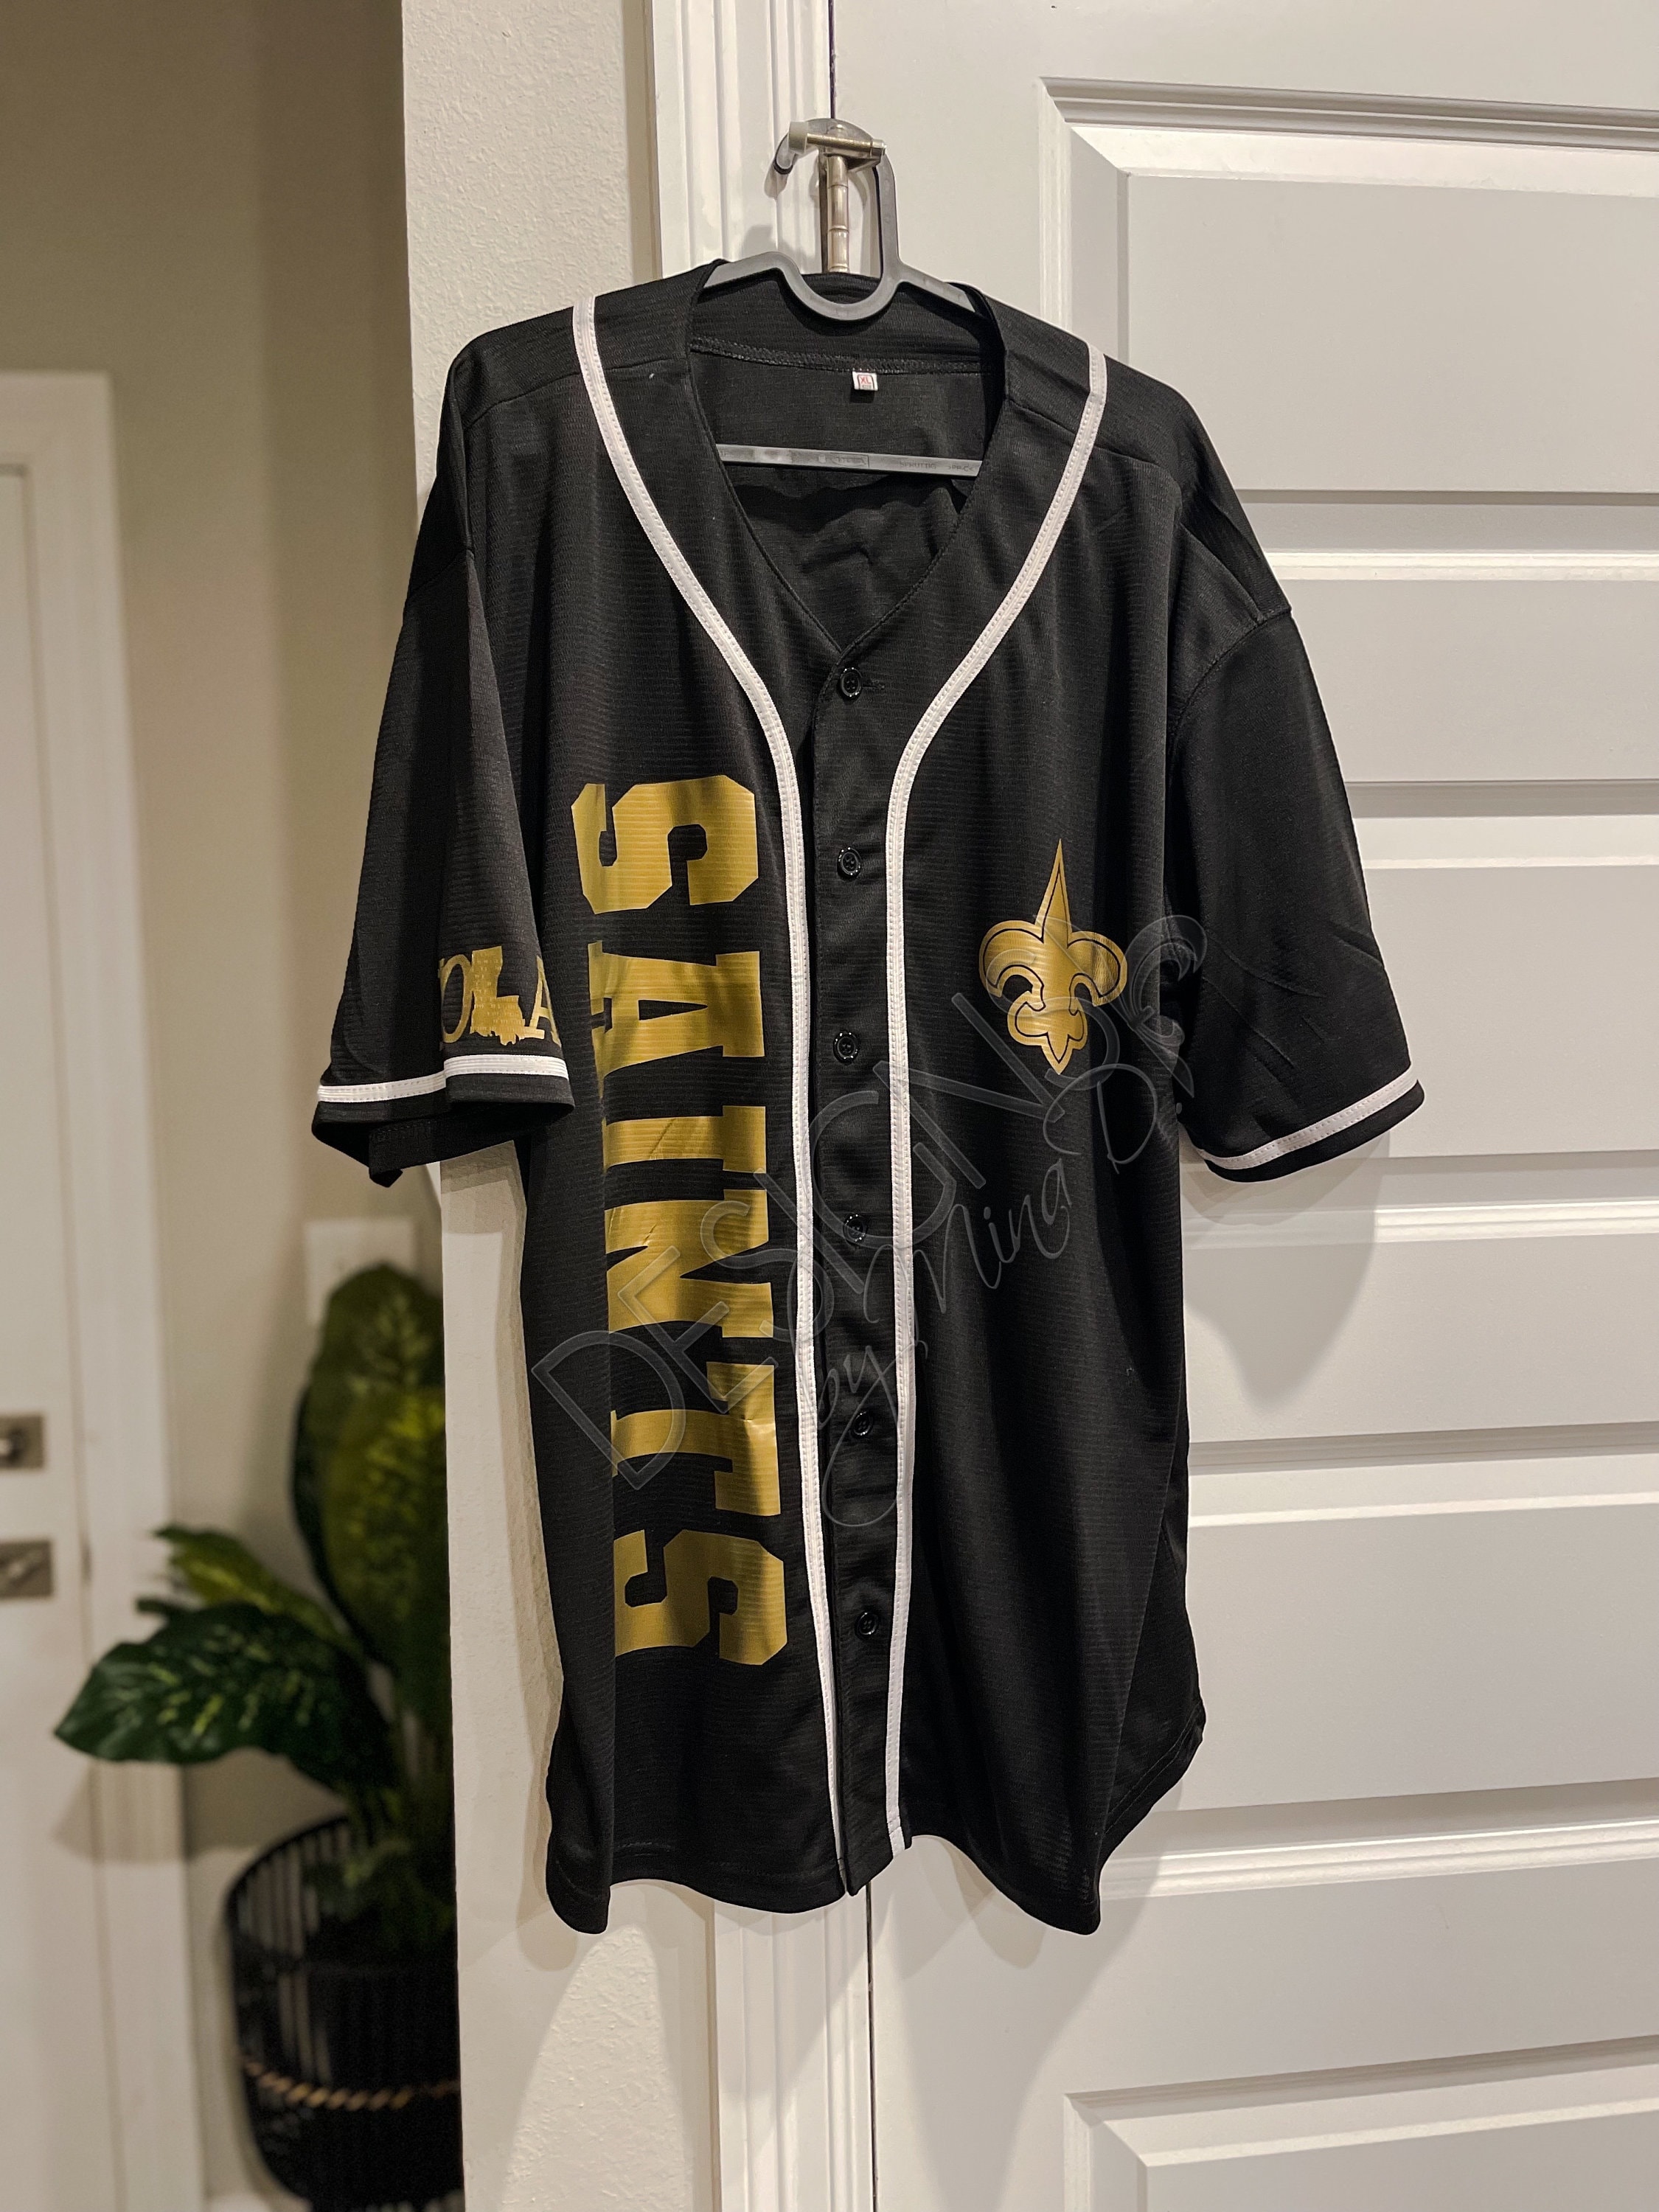 saints baseball jersey